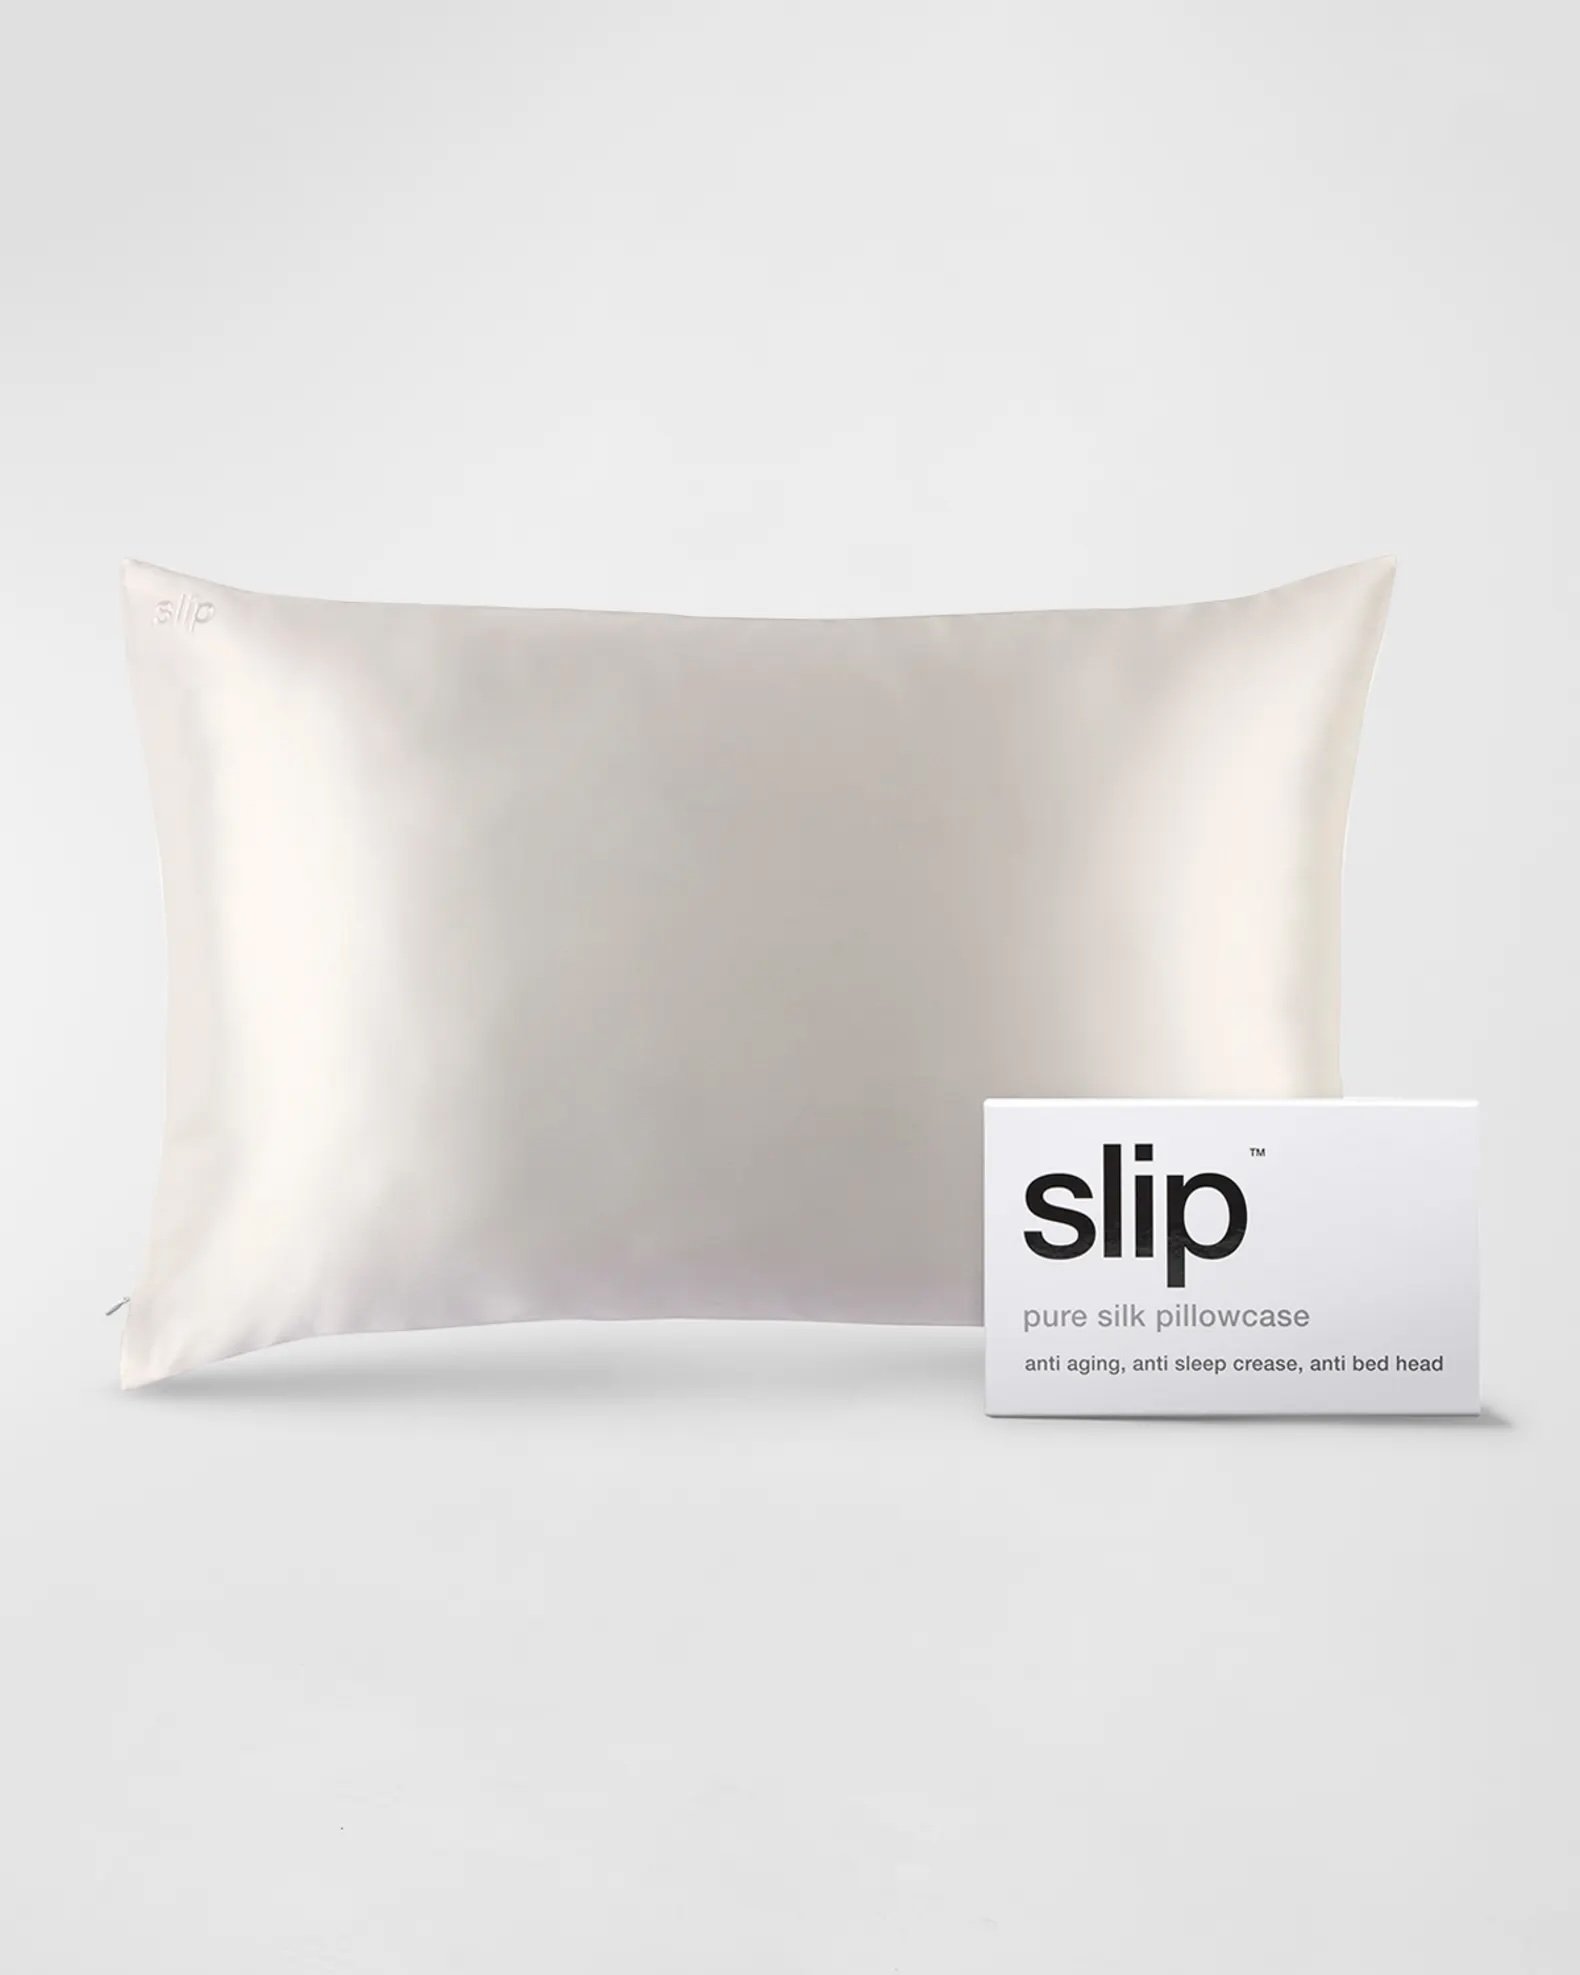 Slip Pillowcase $66